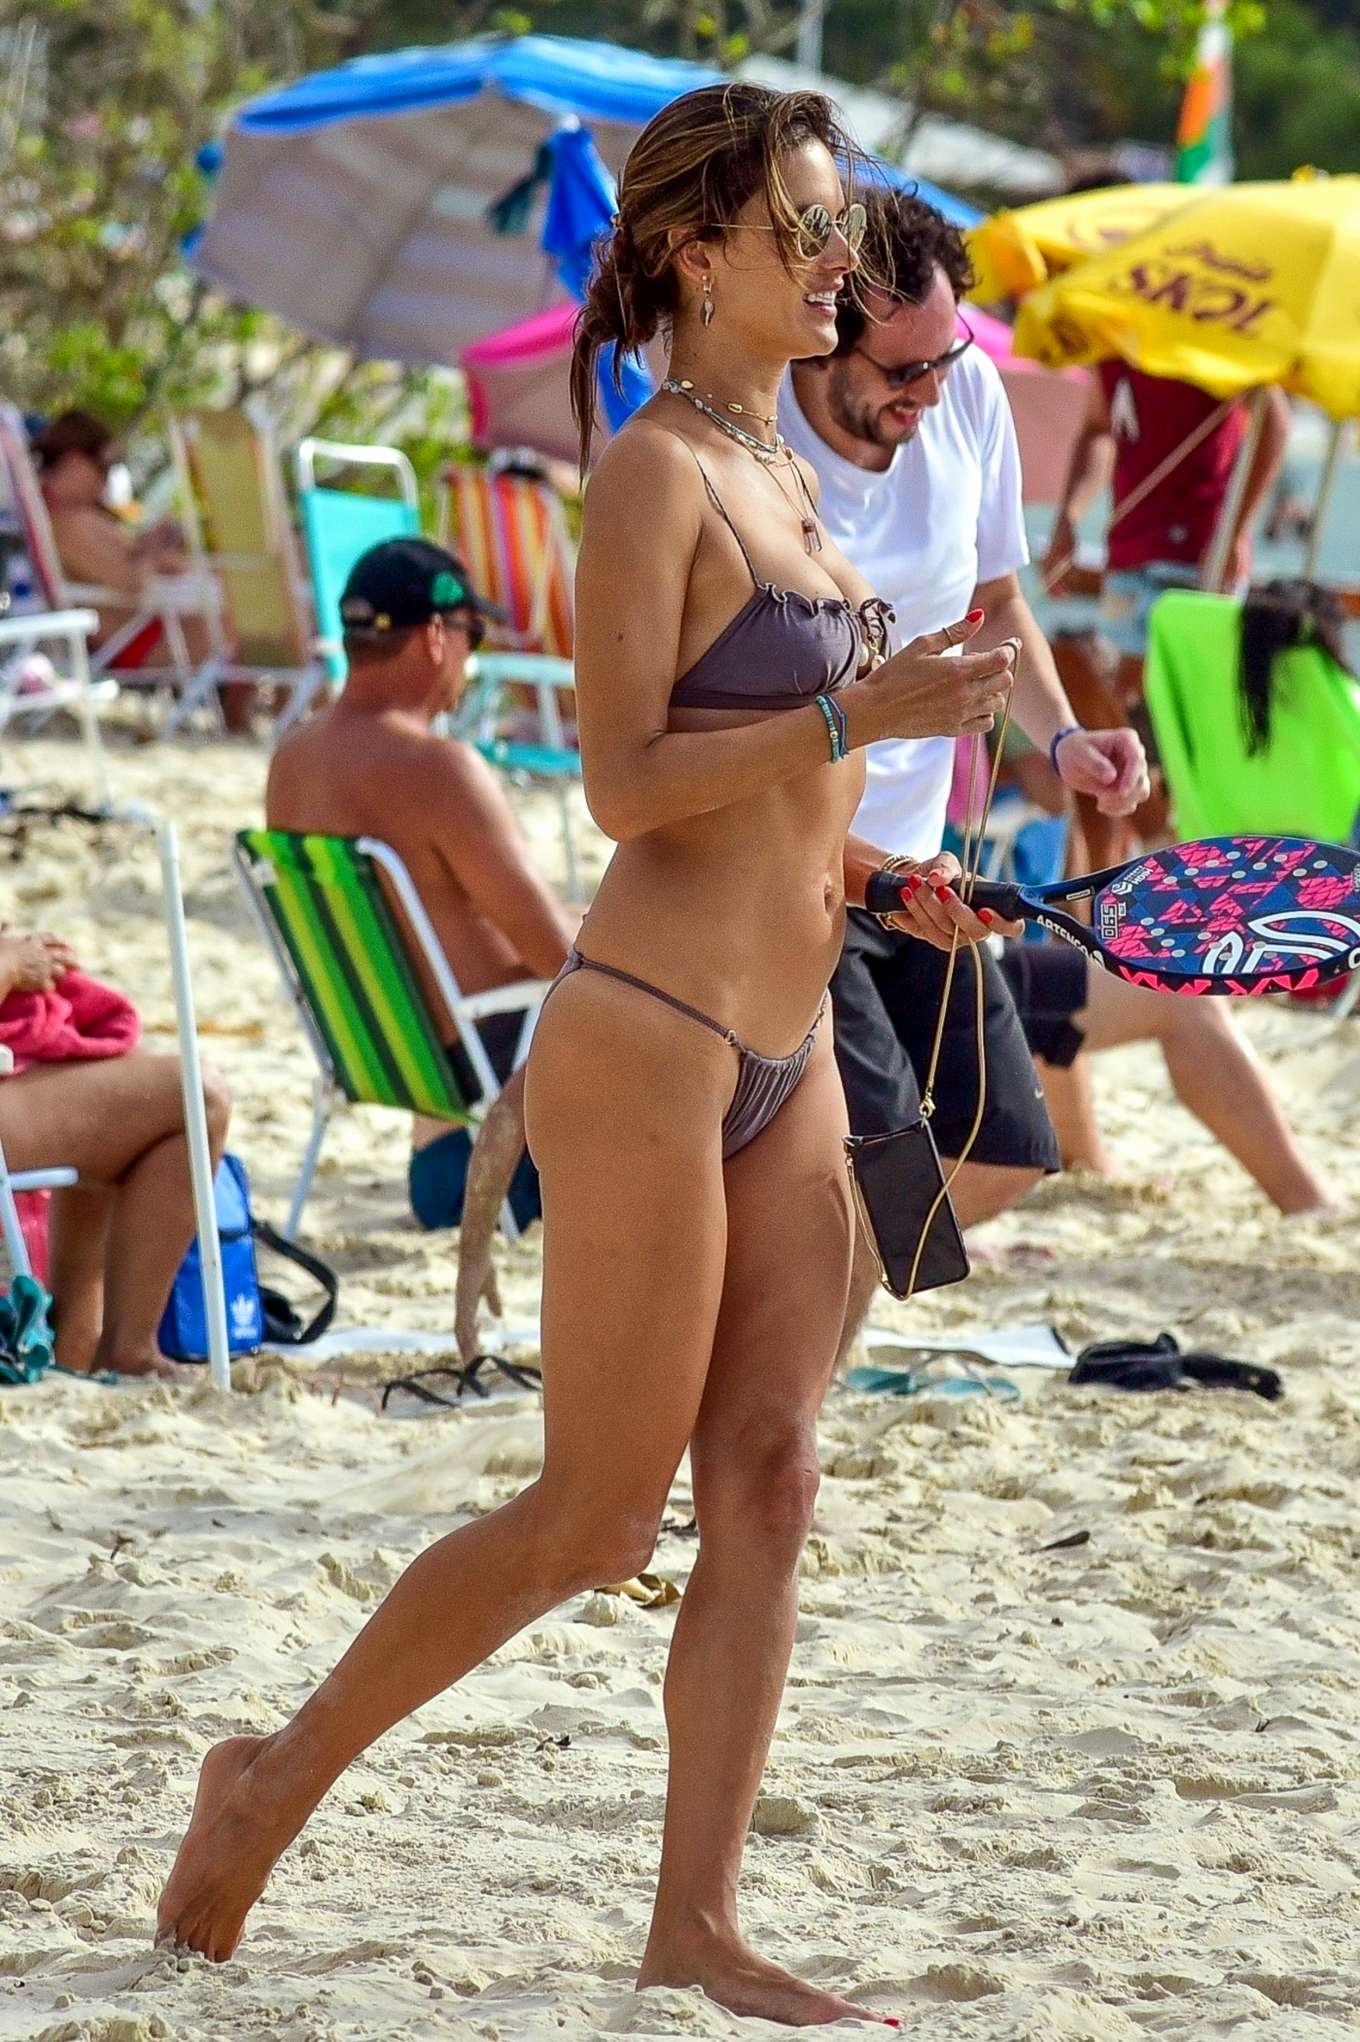 Alessandra Ambrosio - Spotted In a bikini on the beach in 